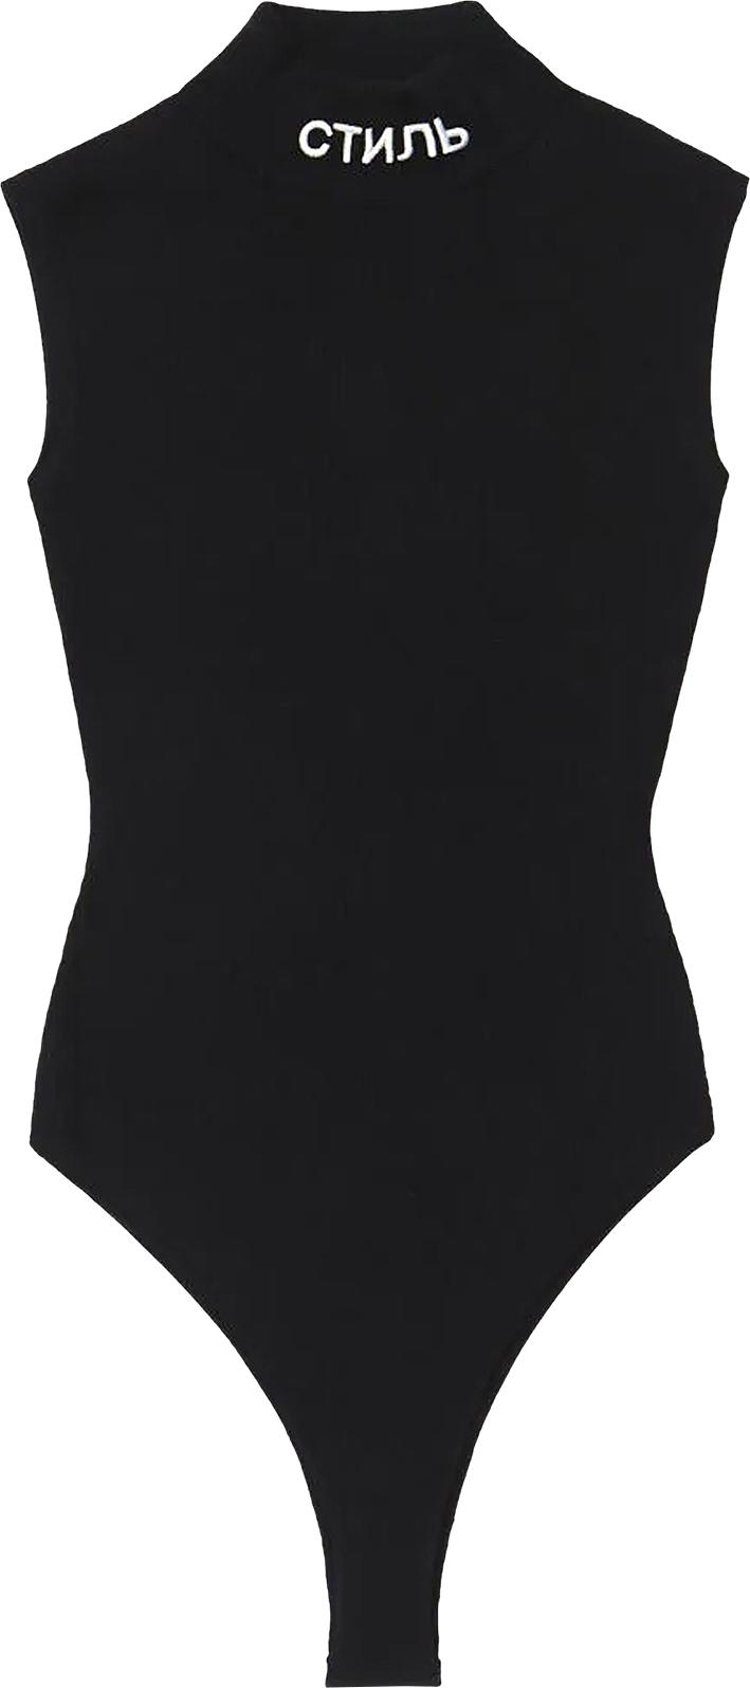 Heron Preston Ctnmb Knit Rib Sleeveless Bodysuit 'Black'